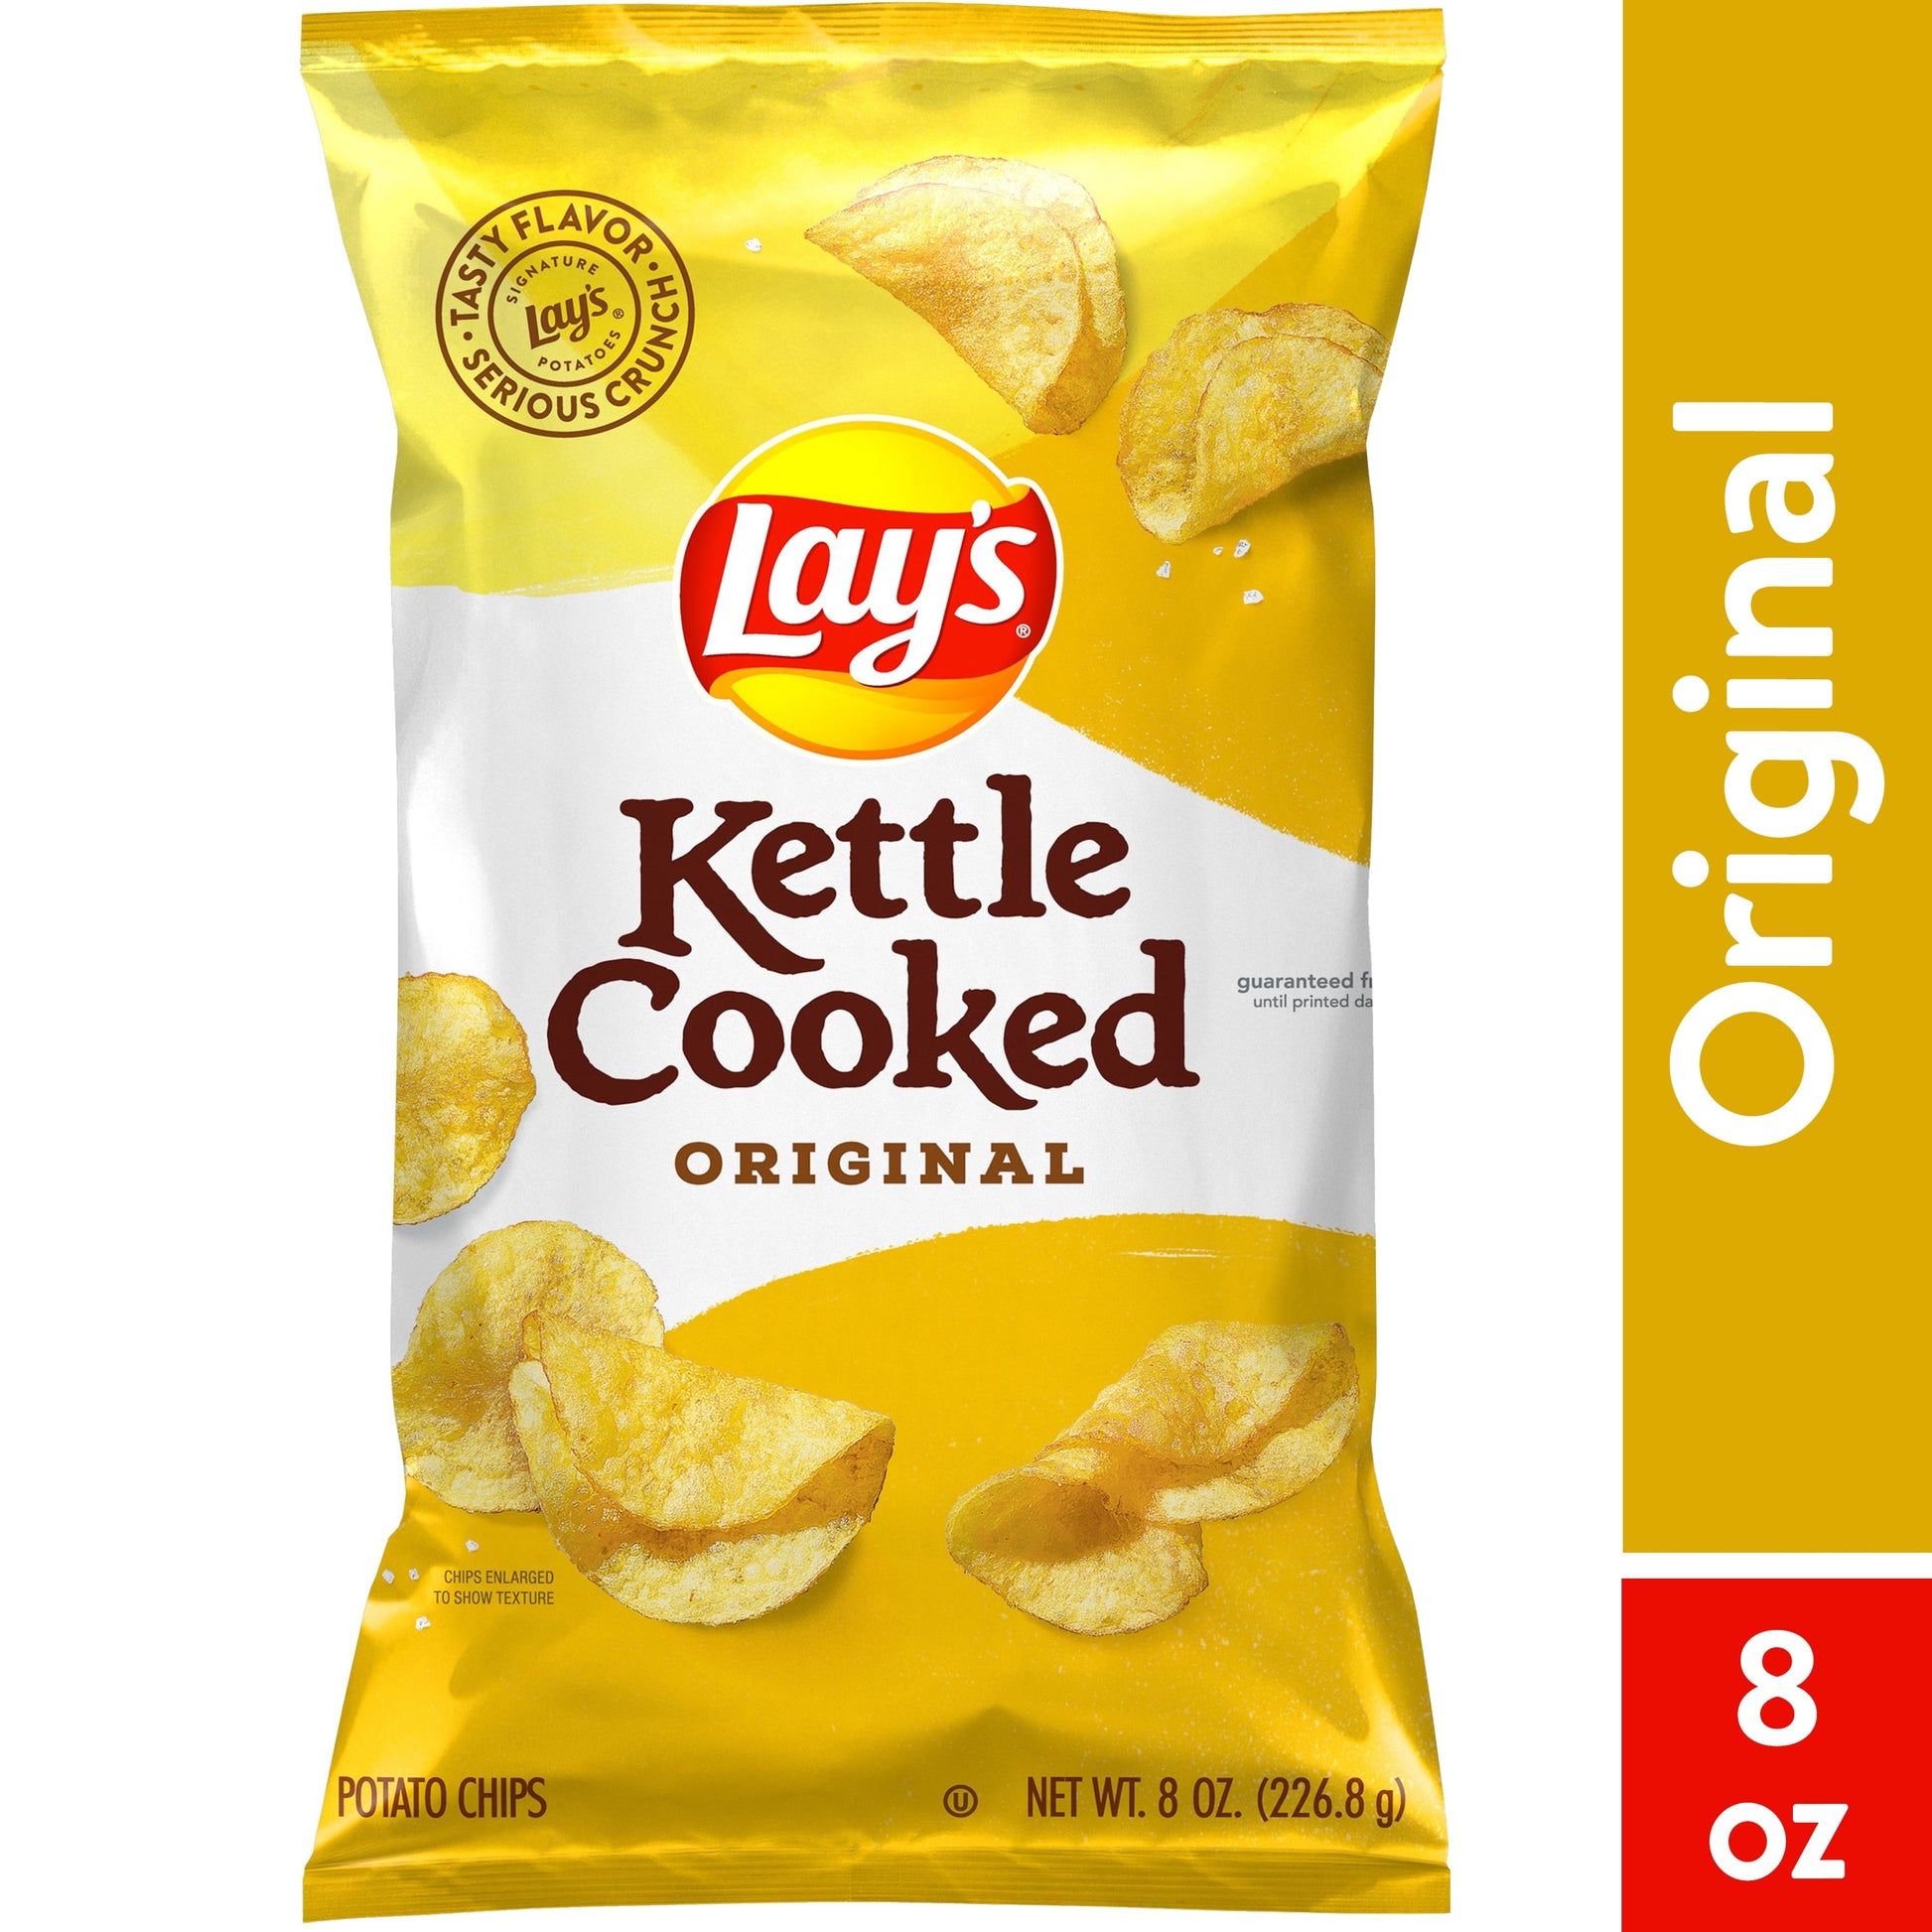 Kettle Cooked Original Potato Snack Chips, 8 Oz Bag